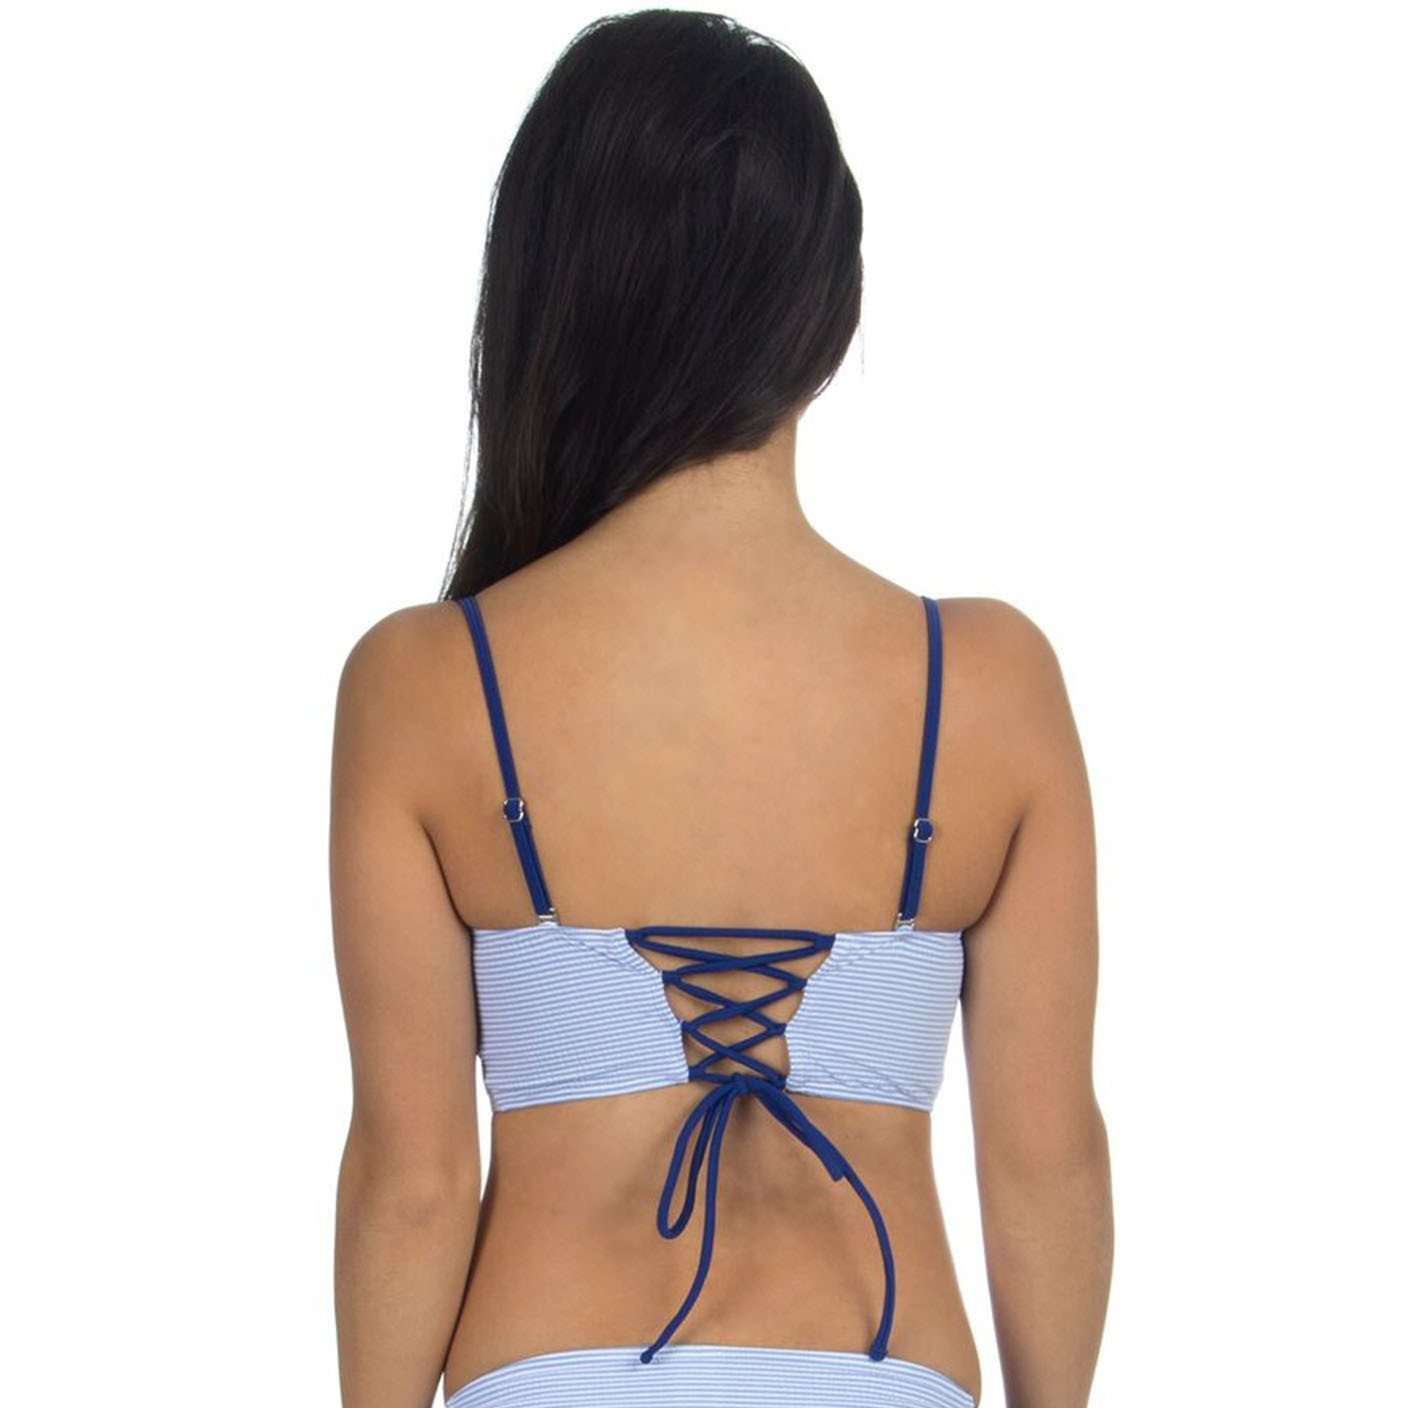 Seersucker Lace-Up Bustier Bikini Top in Blue by Lauren James - Country Club Prep